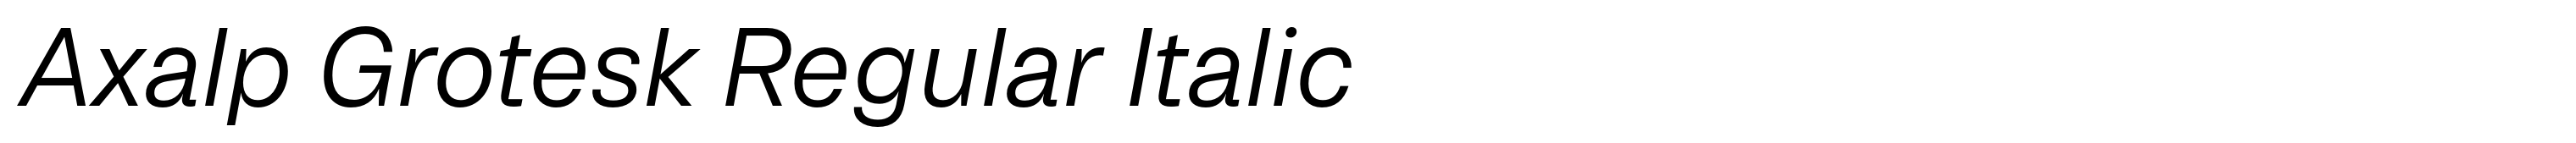 Axalp Grotesk Regular Italic